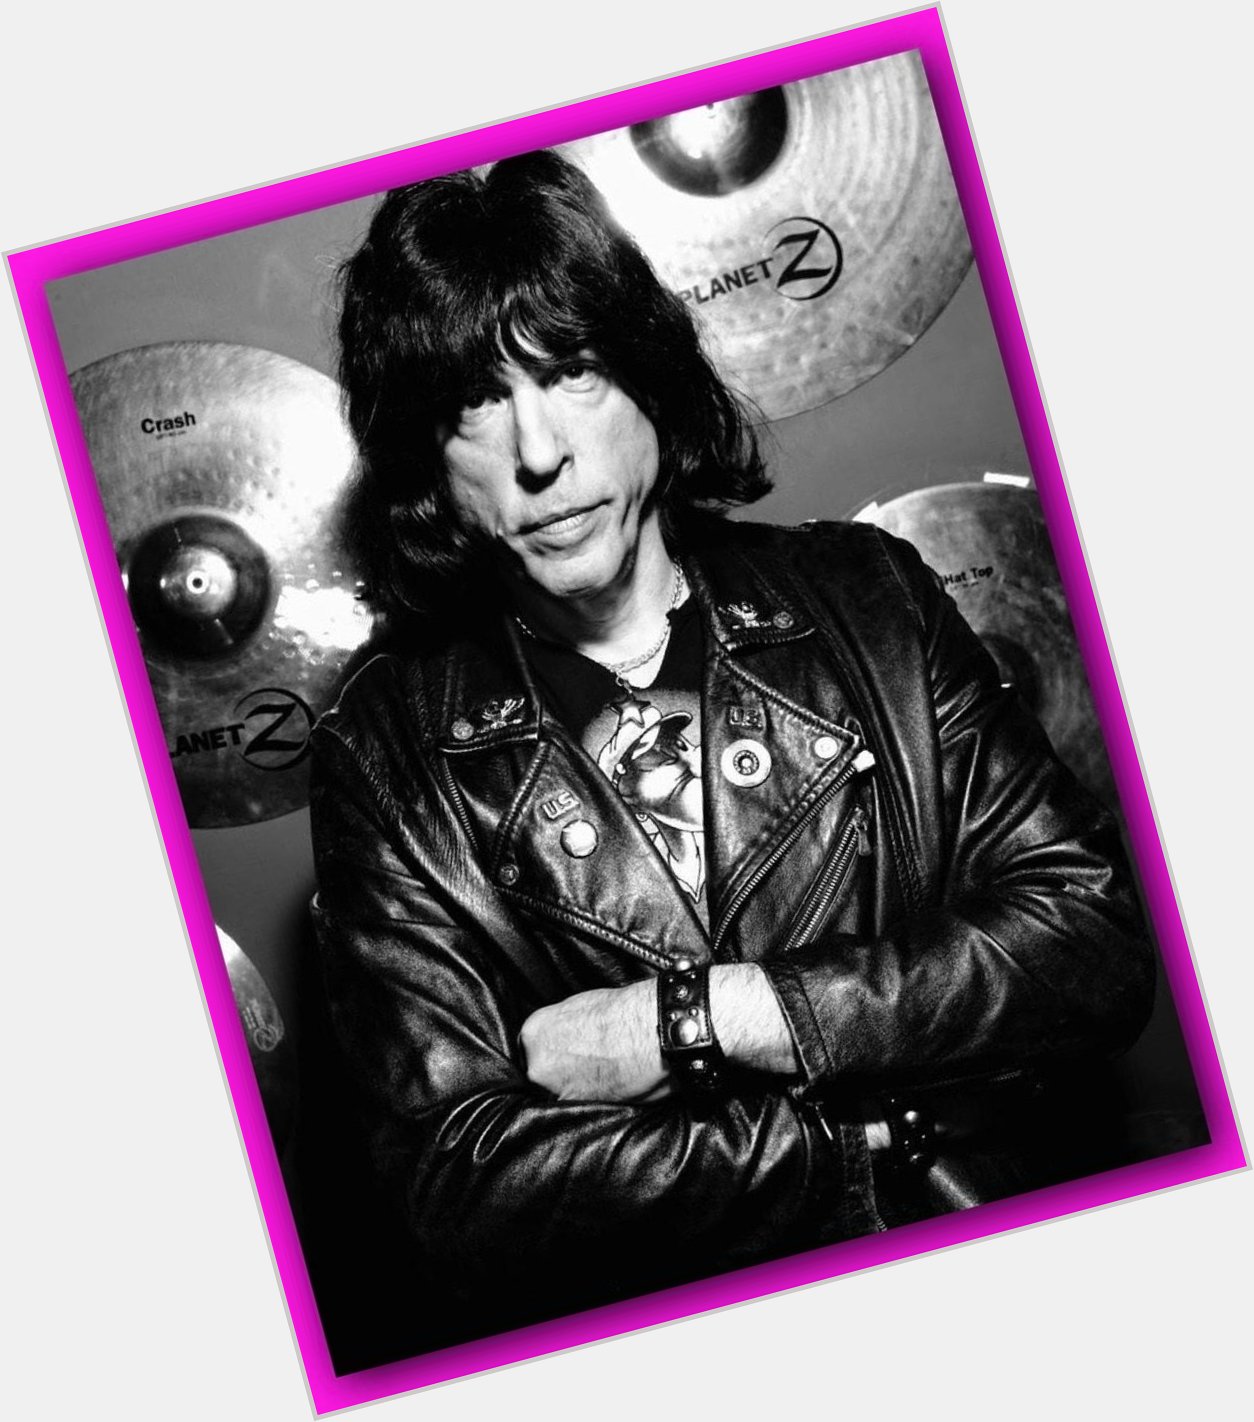 Happy Birthday Marky Ramone
Drummer for The Ramones
July 15, 1952 Brooklyn, New York 